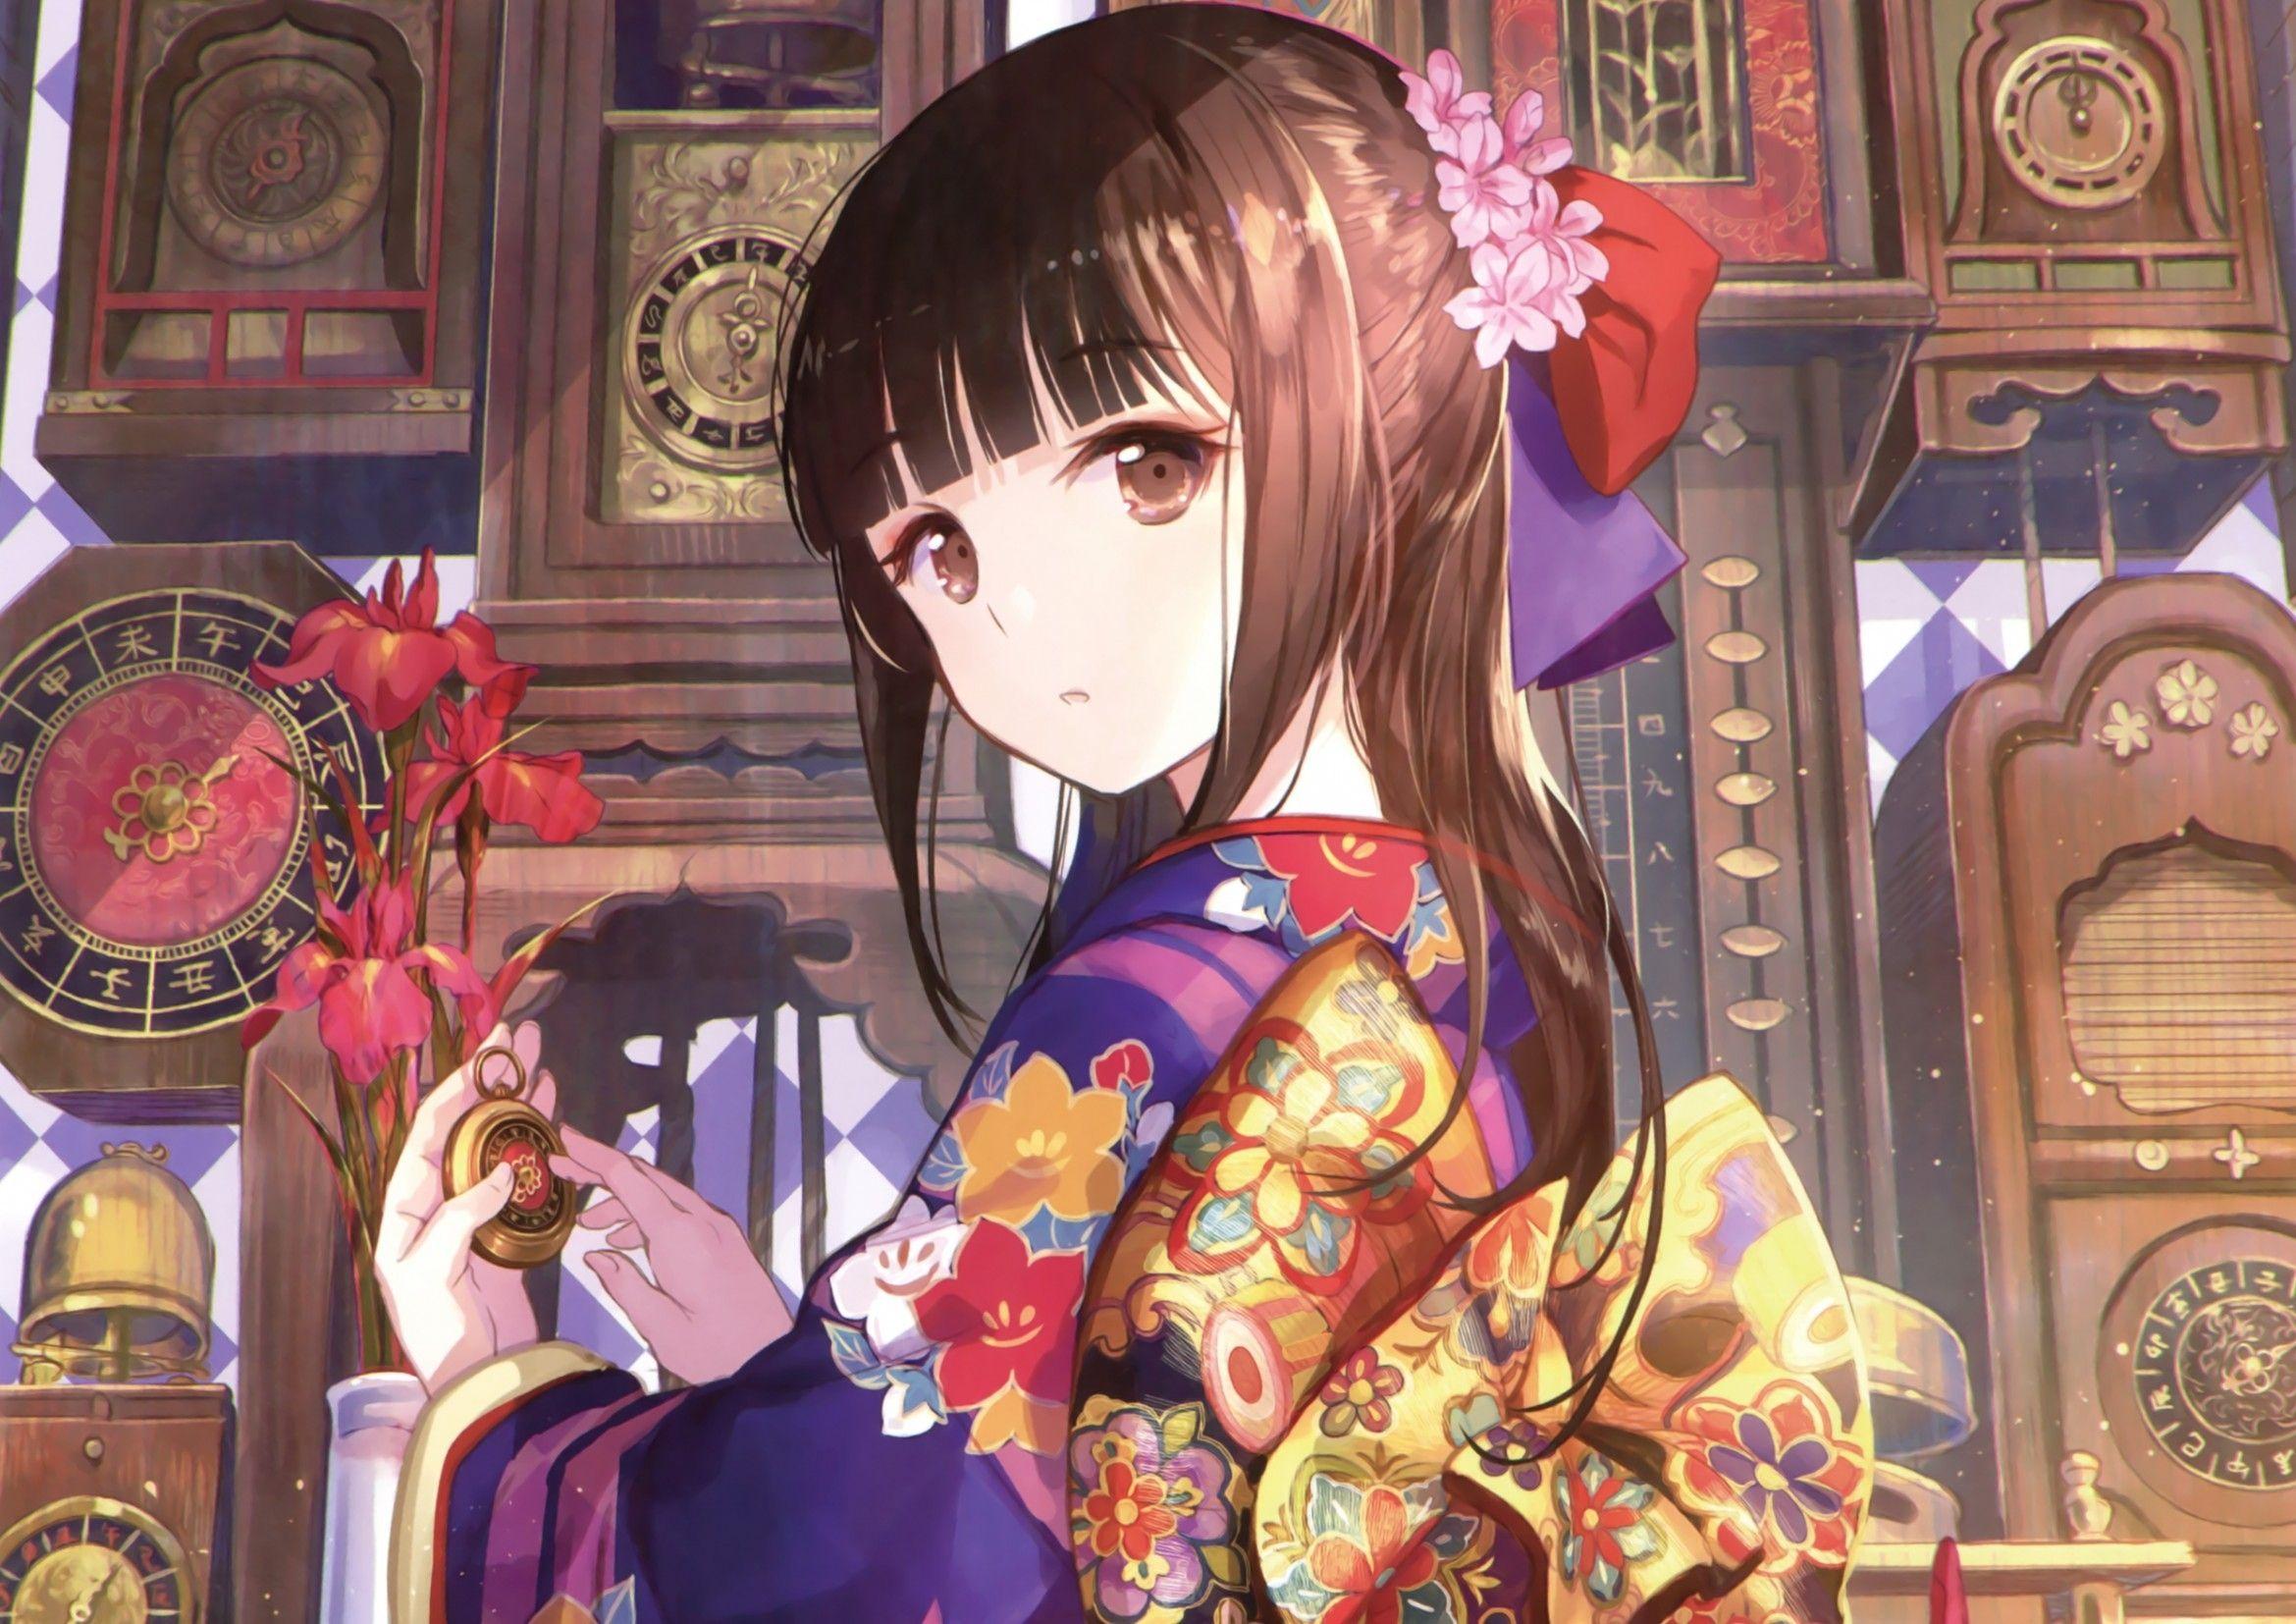 Beautiful Kimono Anime Girl Wallpapers - Top Free Beautiful Kimono